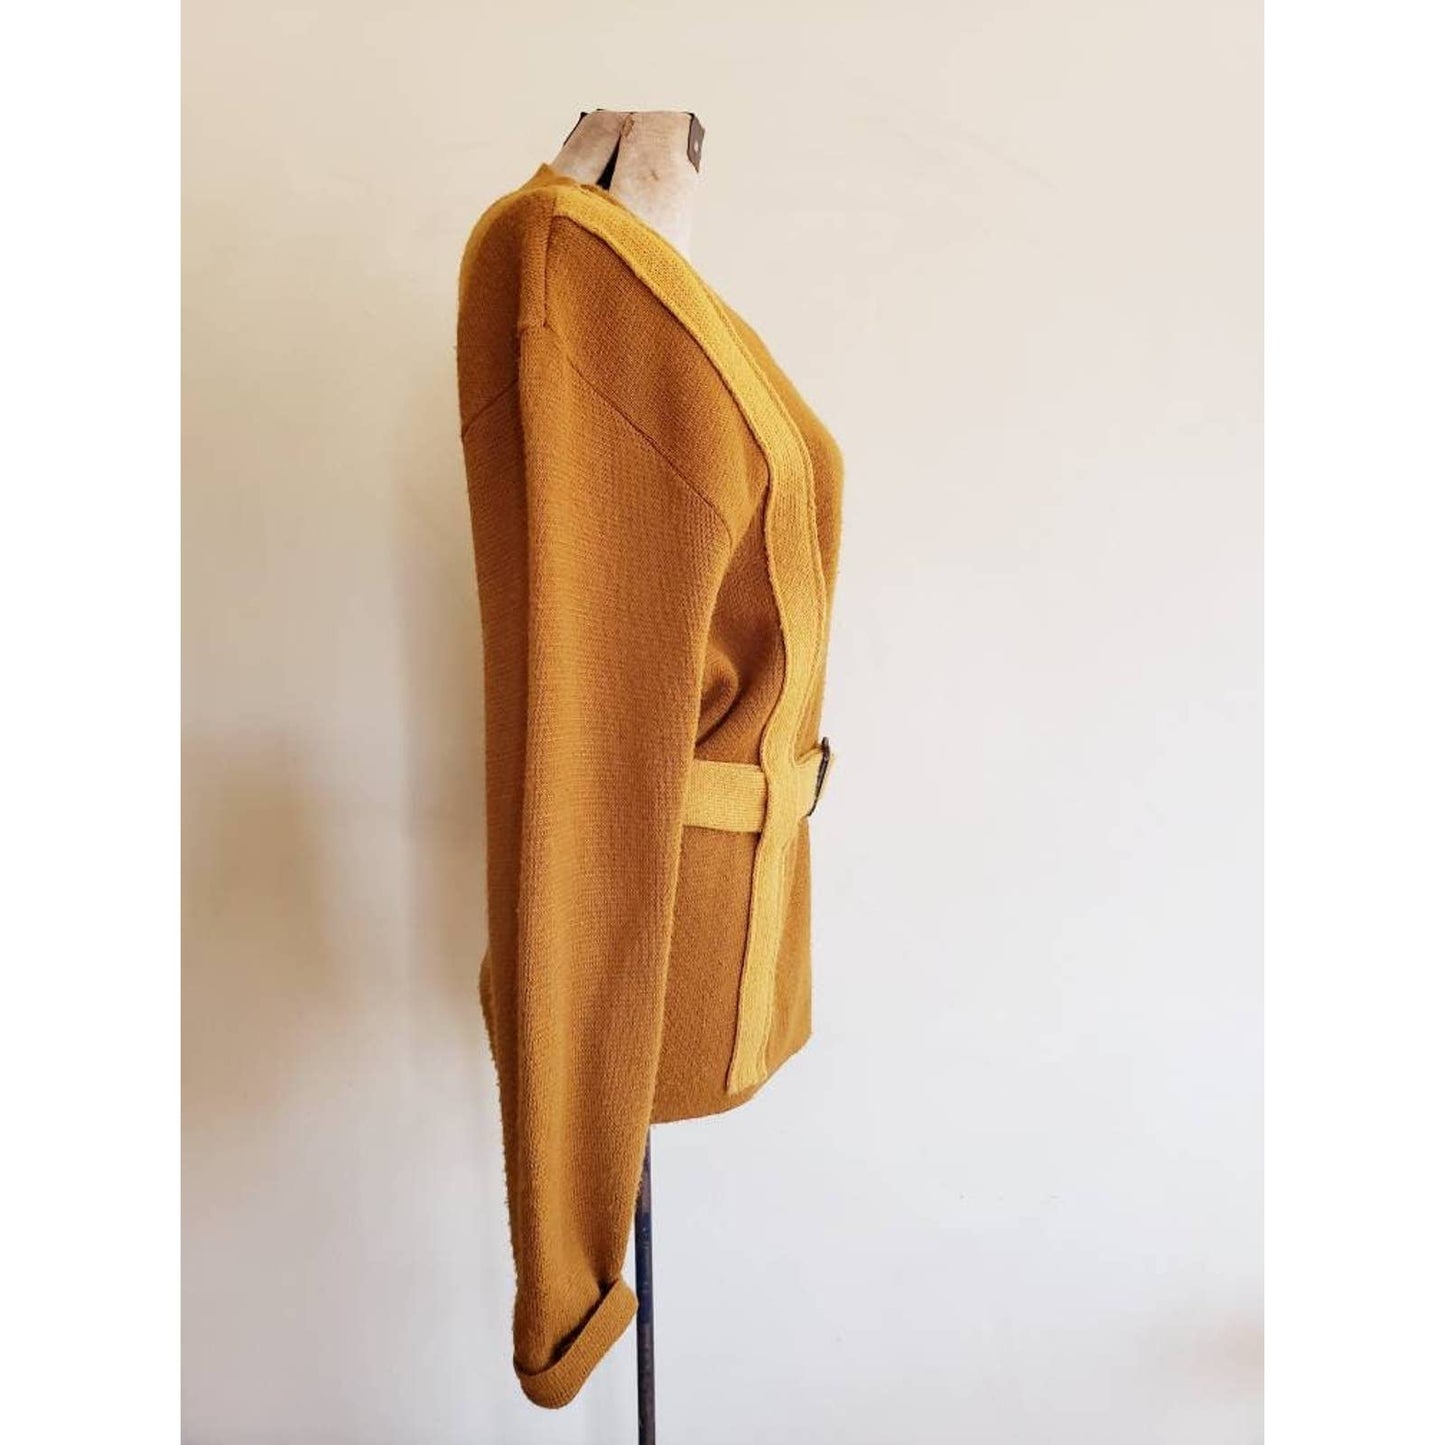 Vintage 70 Mens Sweater Mustard Yellow Sweater Adjustable Buckle Belt